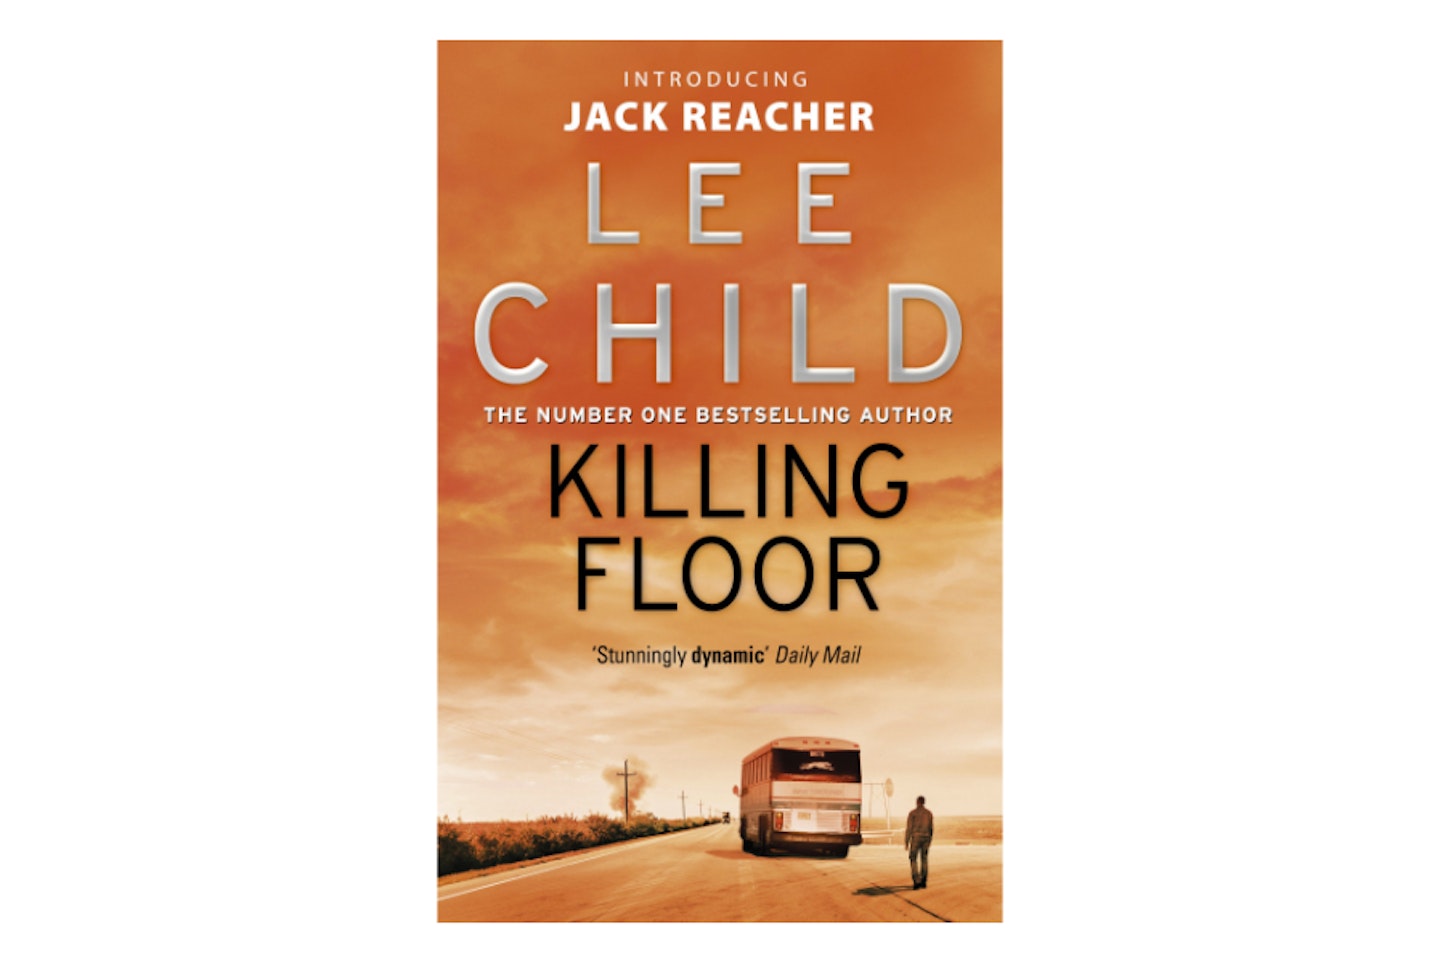 Killing Floor (Jack Reacher Book One) by Lee Child